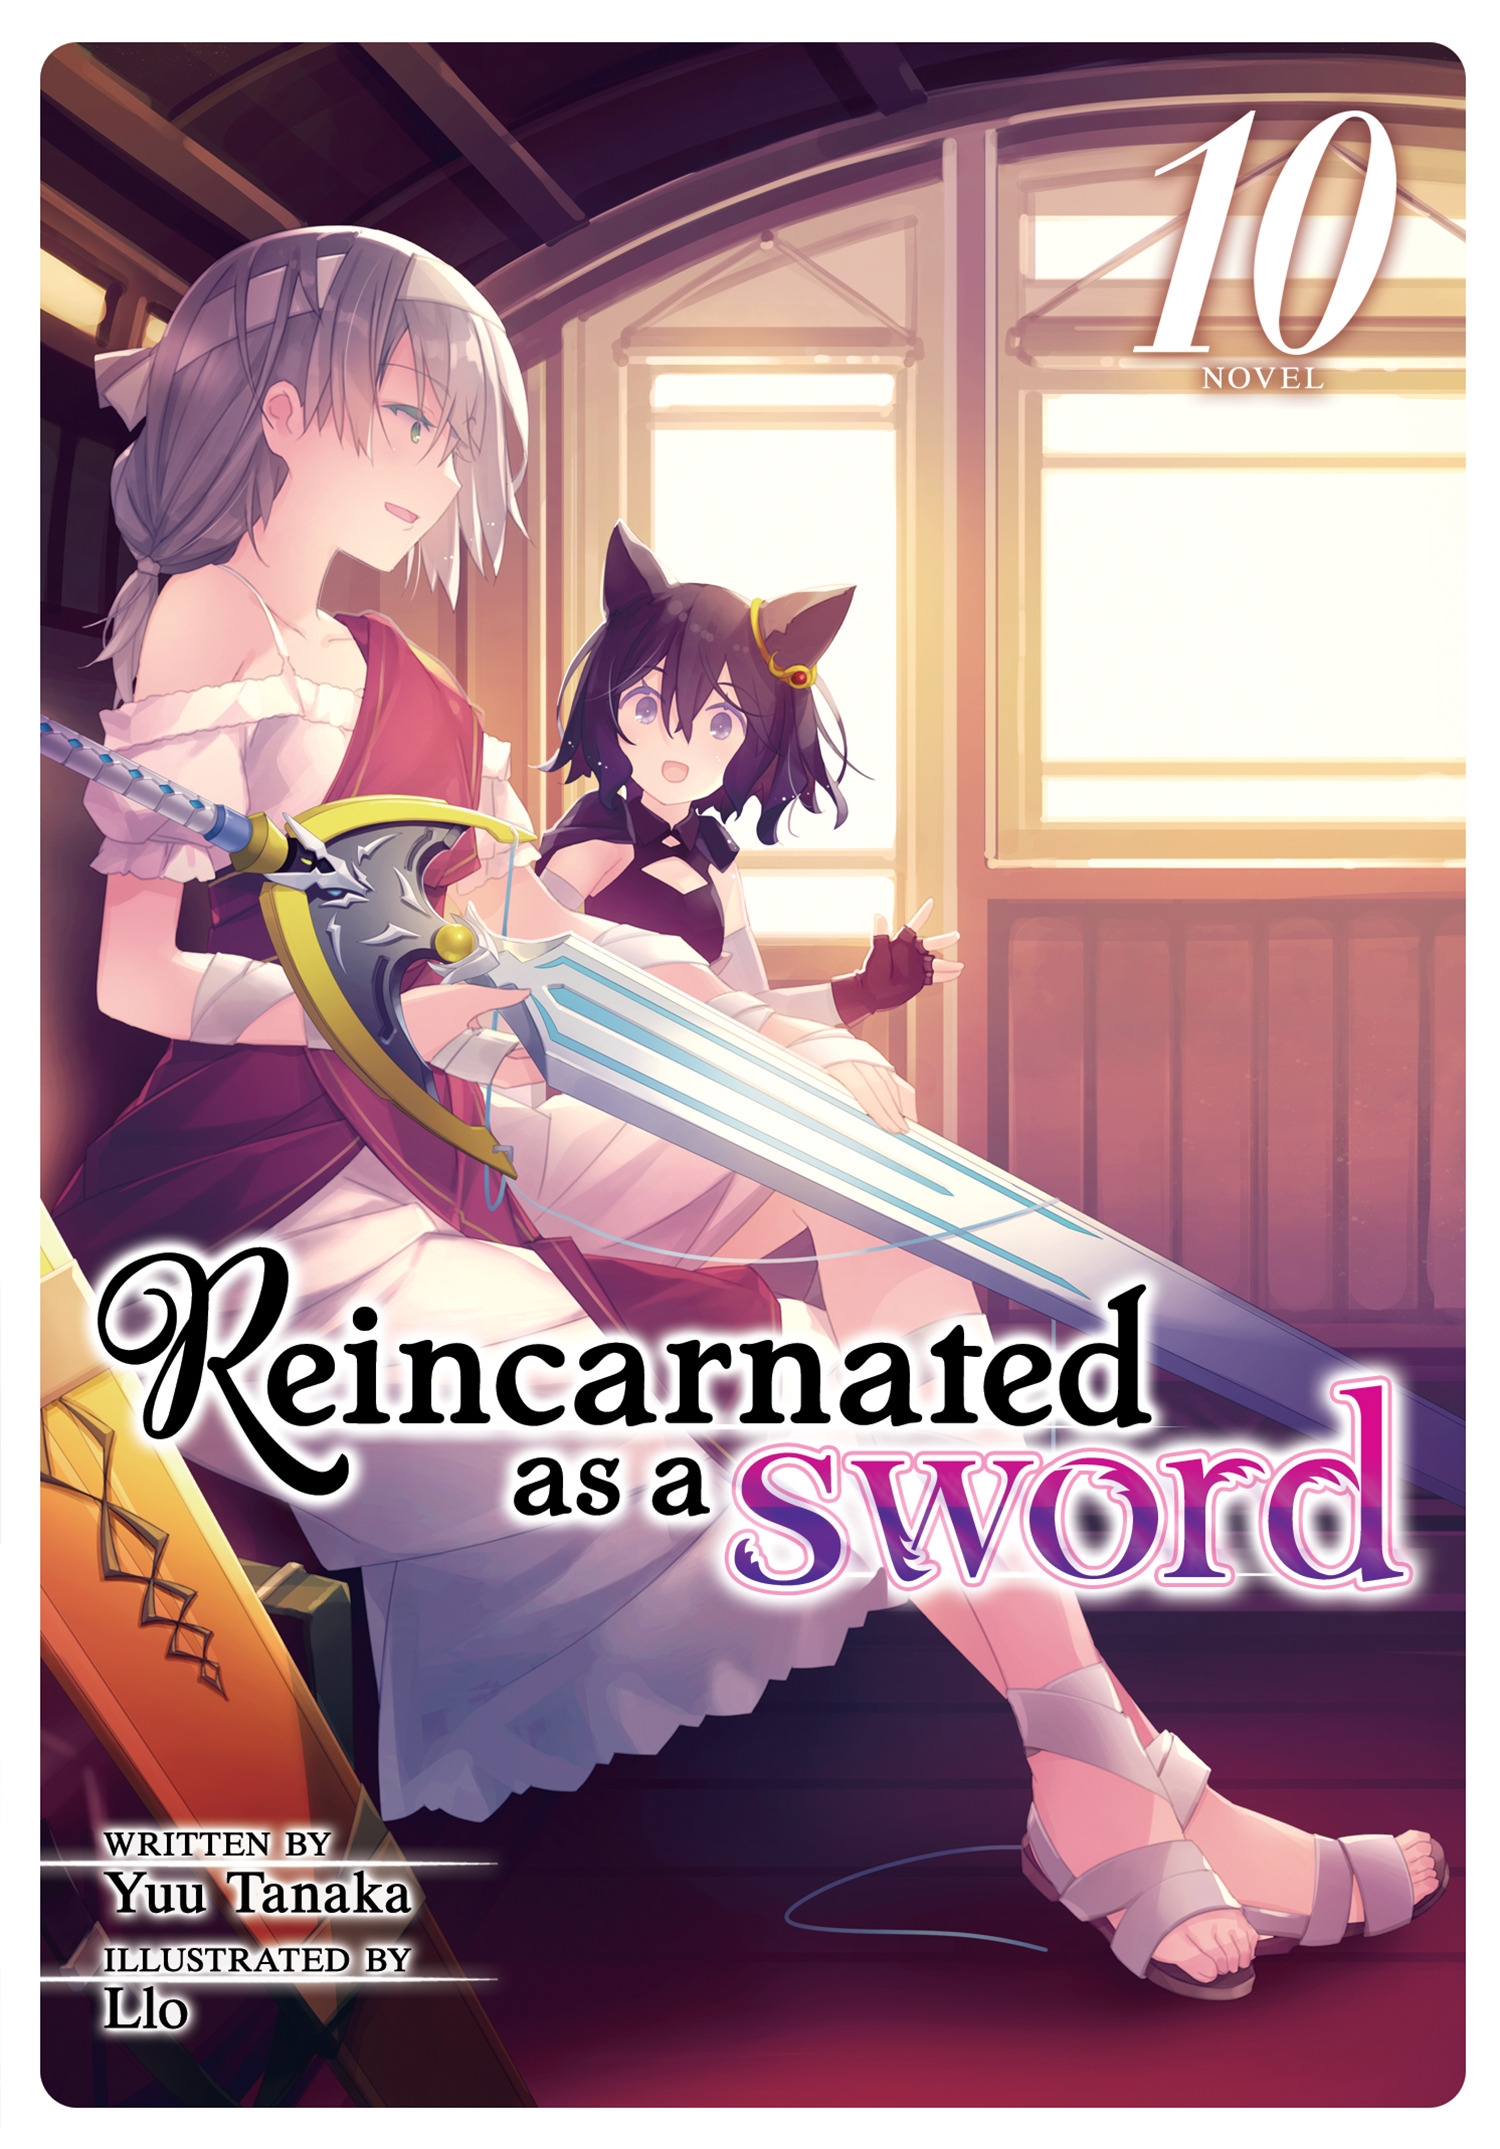 Reincarnated as a Sword Receives Anime Adaptation  Visuals